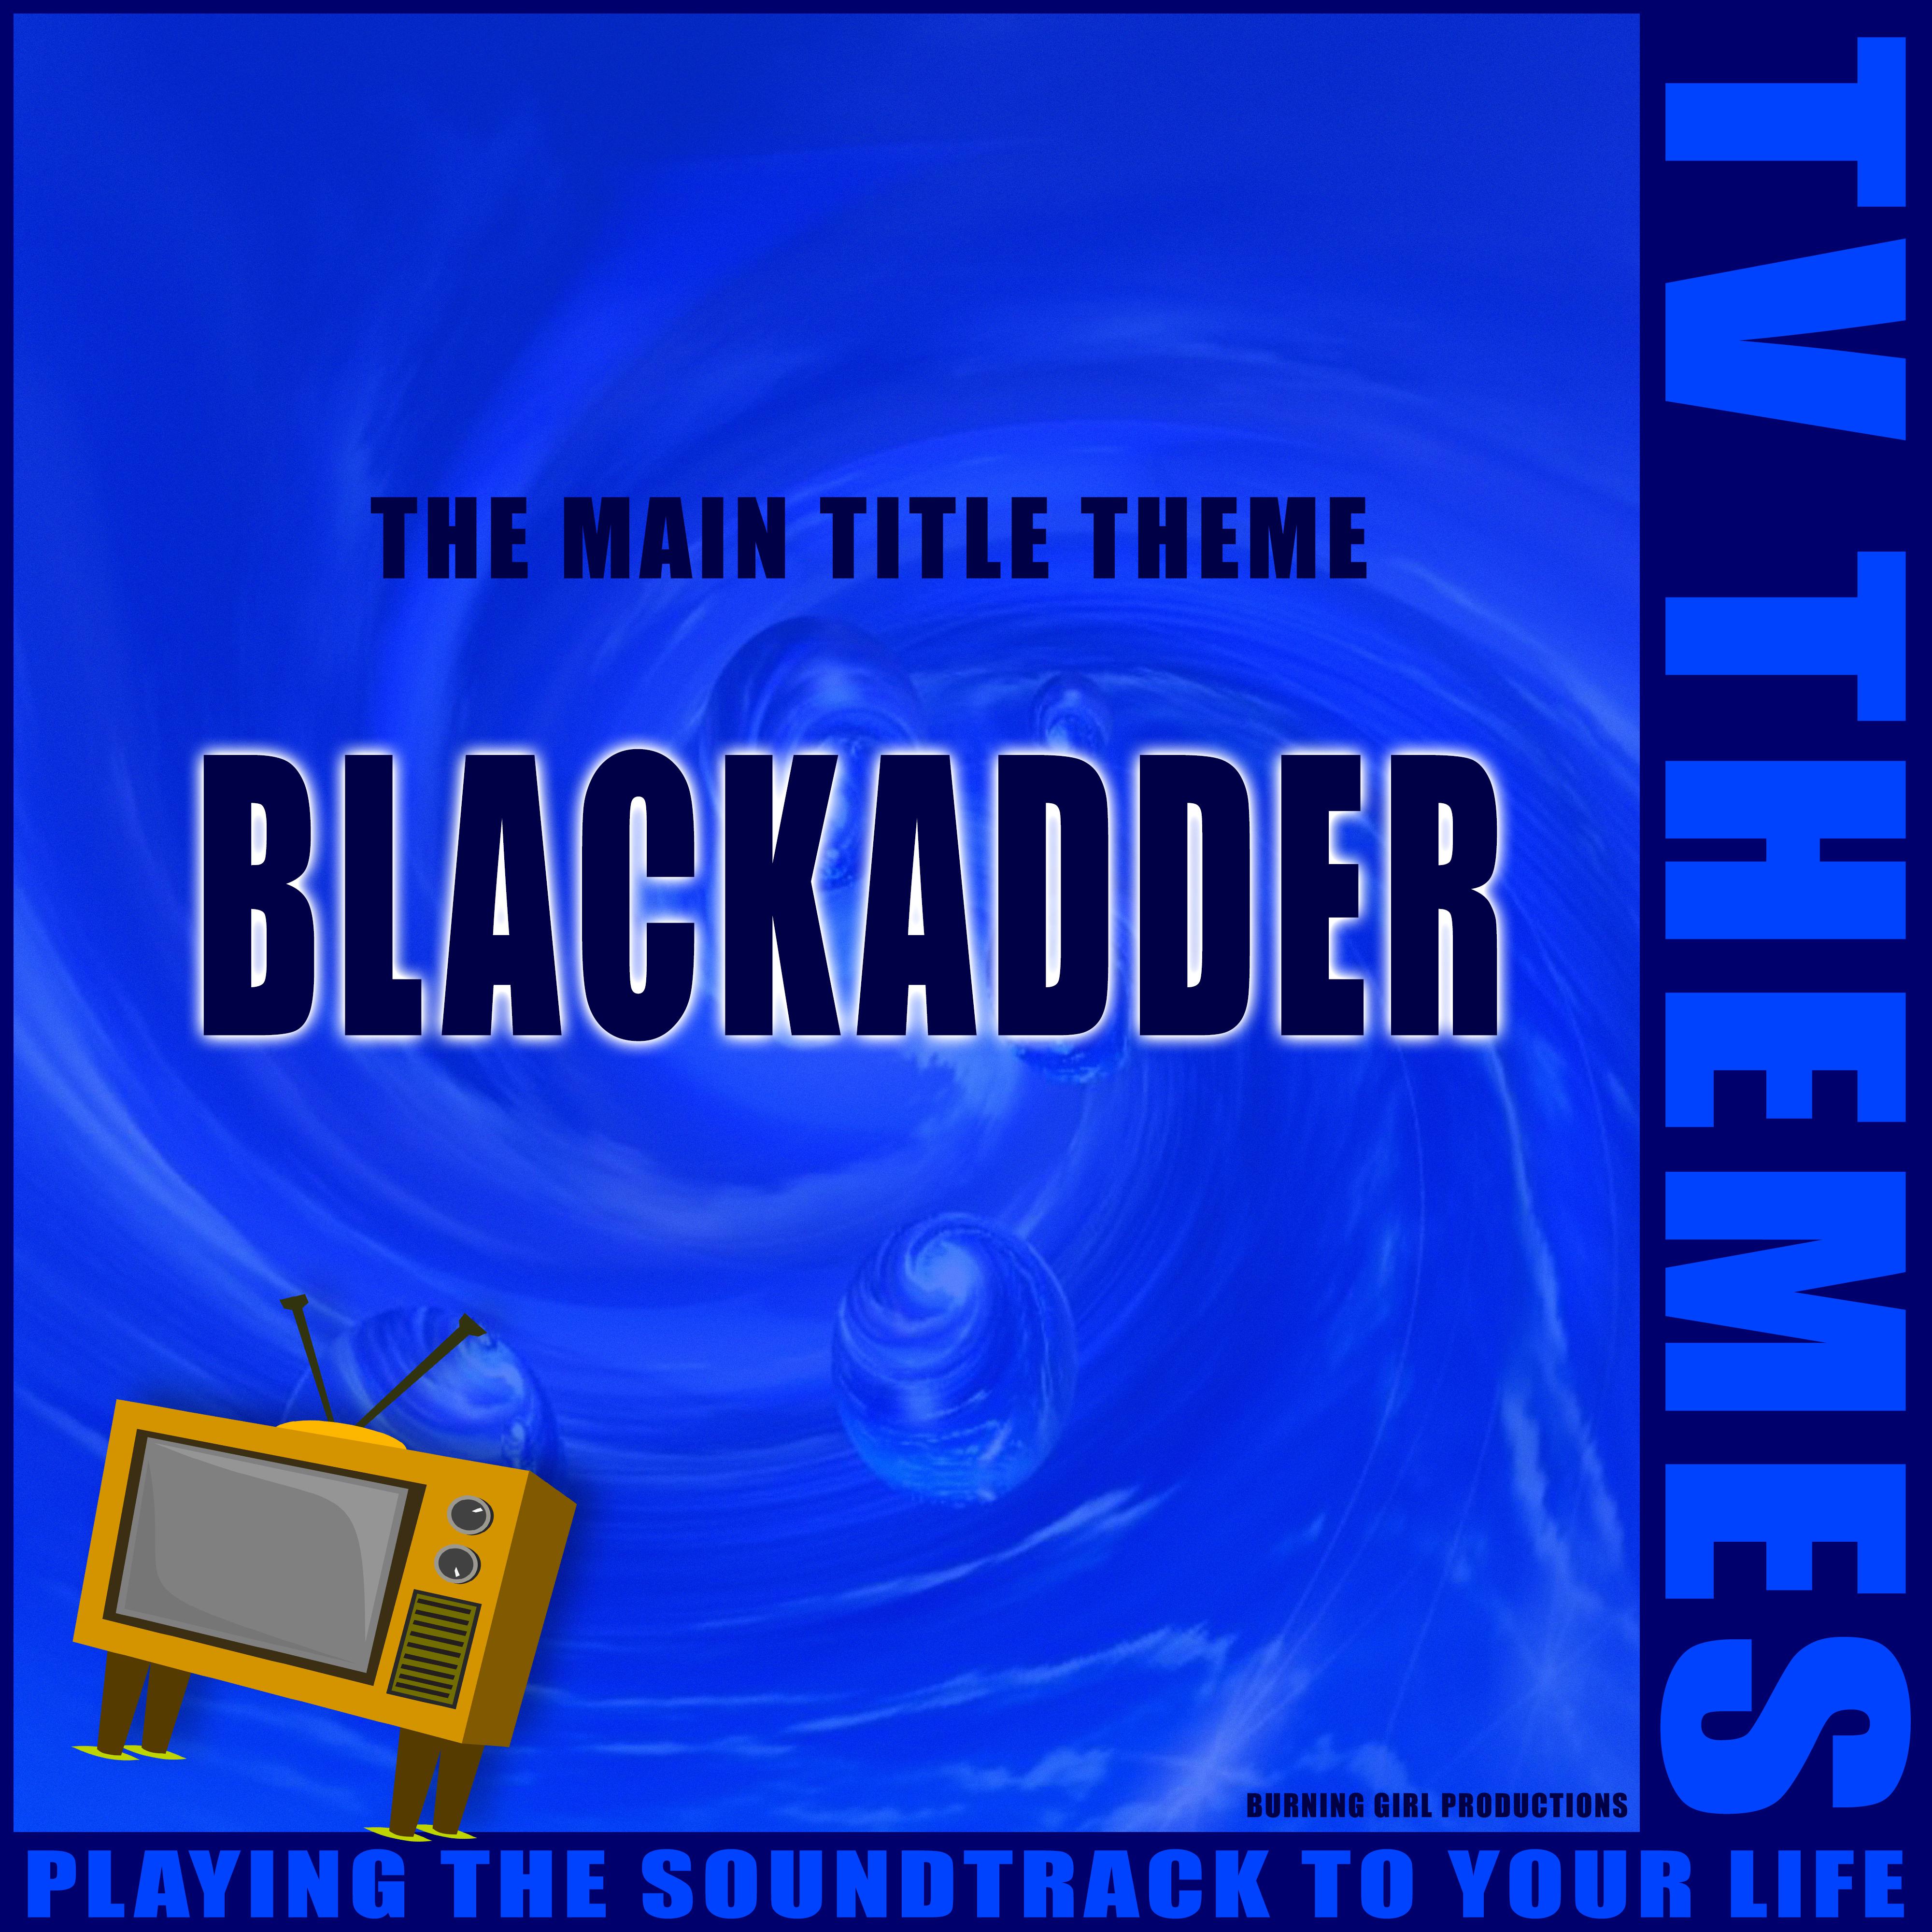 Blackadder - The Main Title Theme